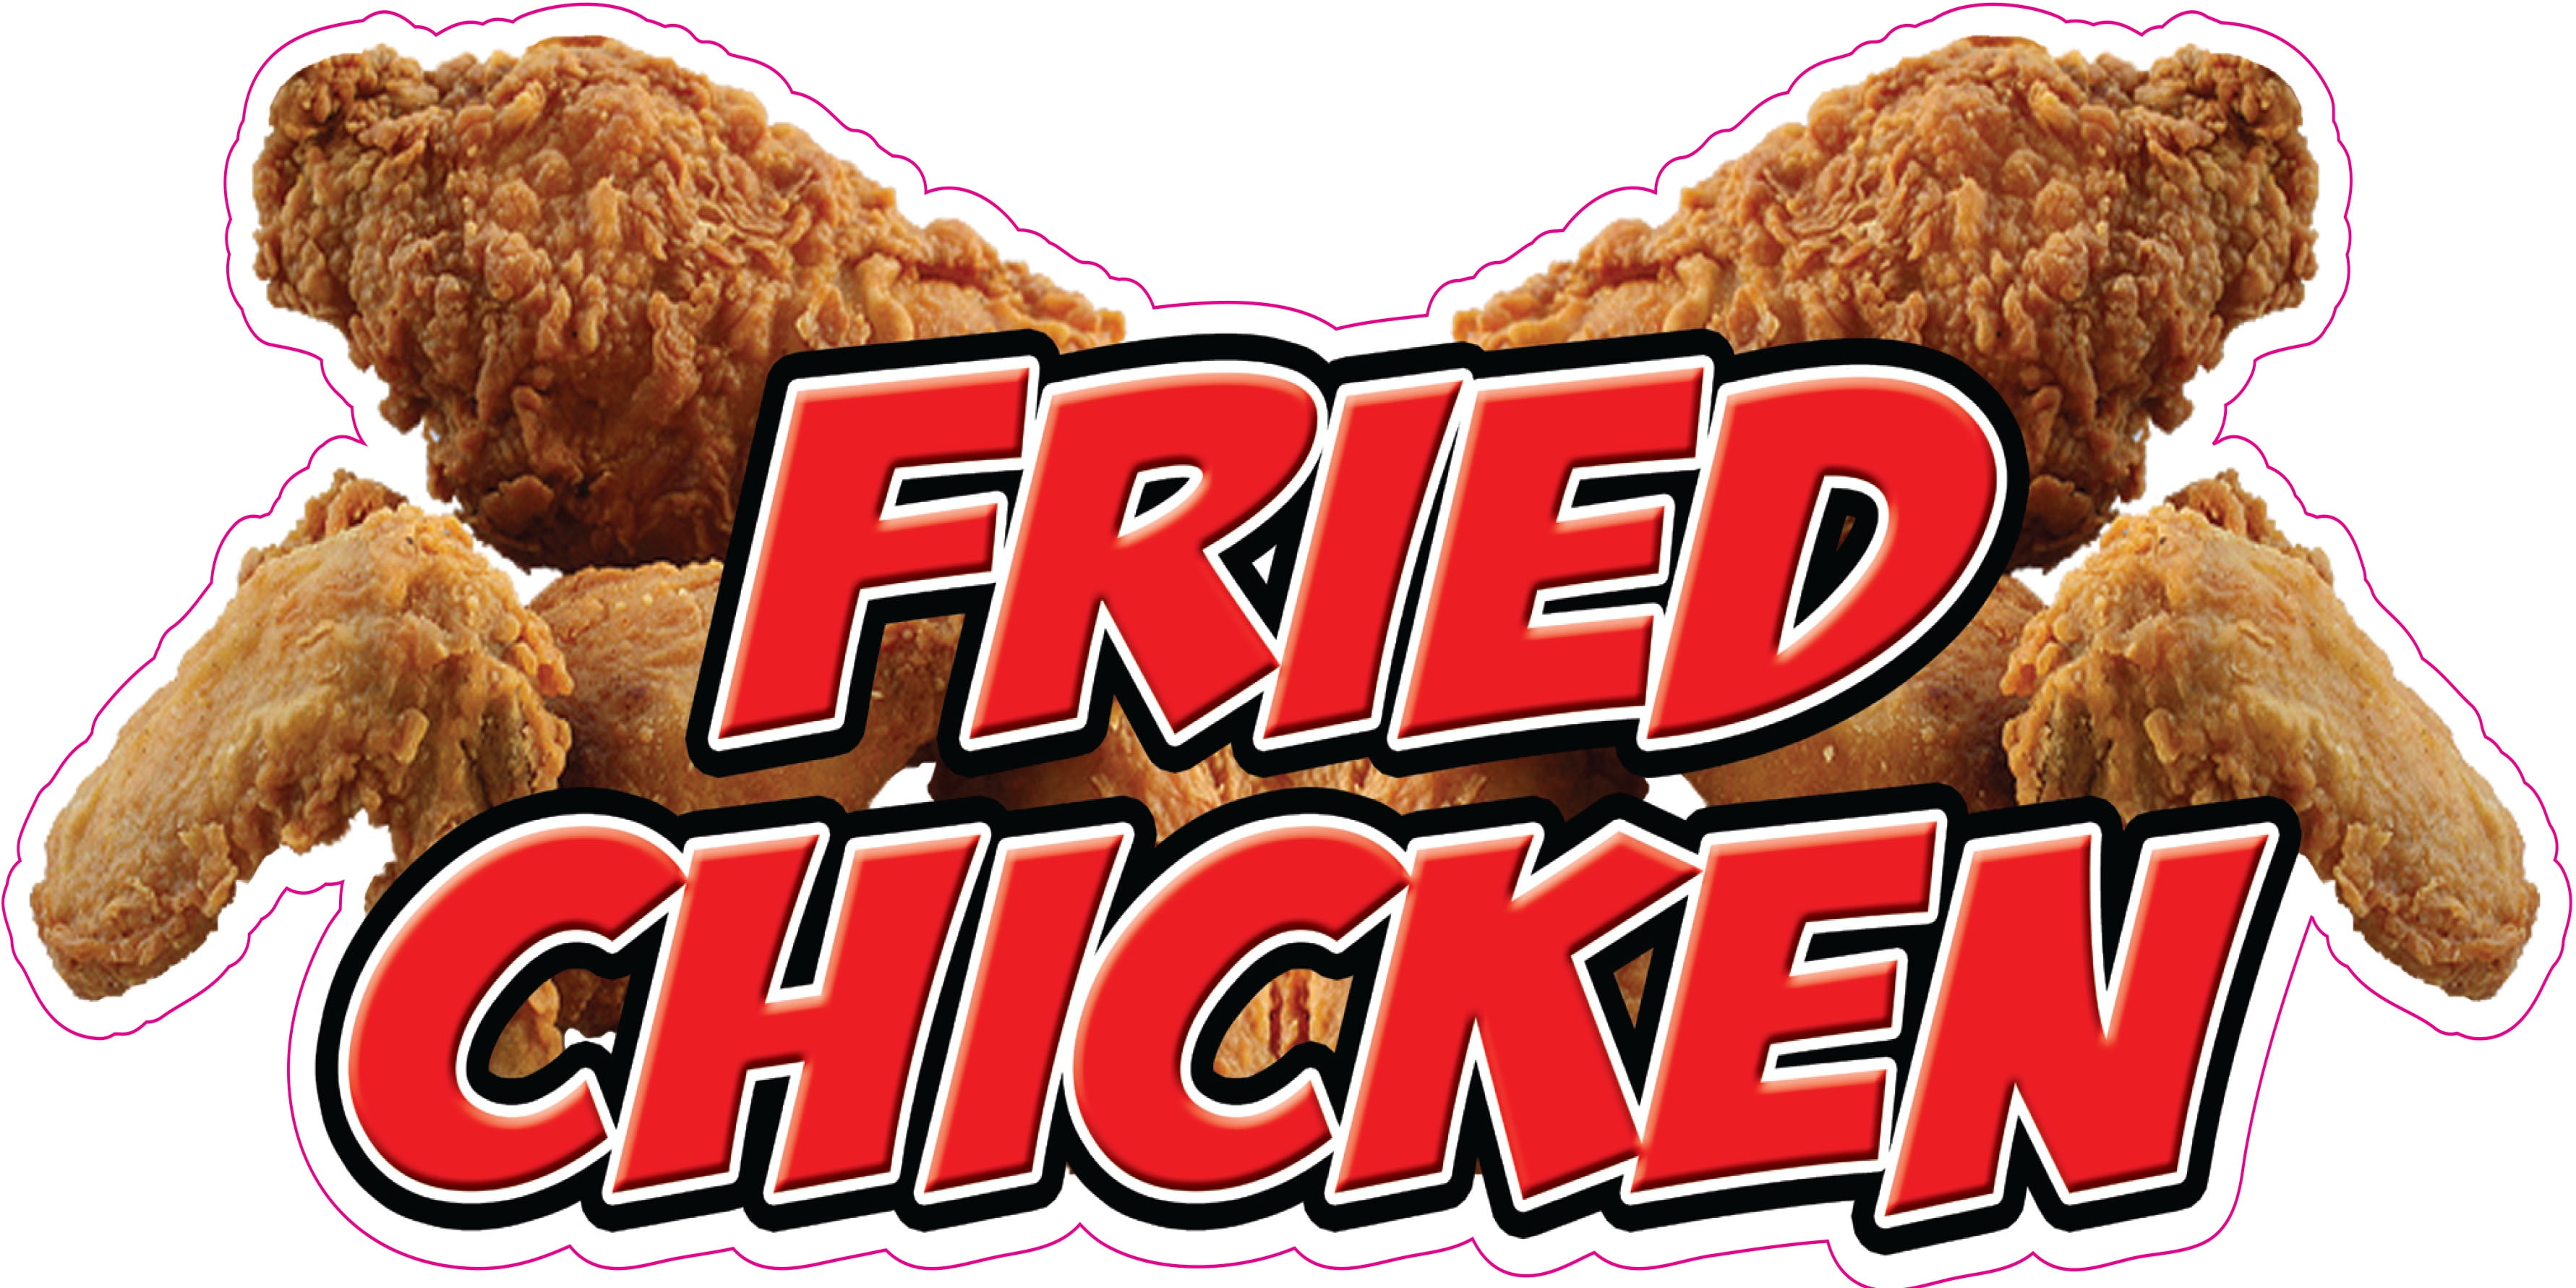 Fried Chicken Black Red Food Bar Restaurant Food Truck Vinyl Banner Sign 